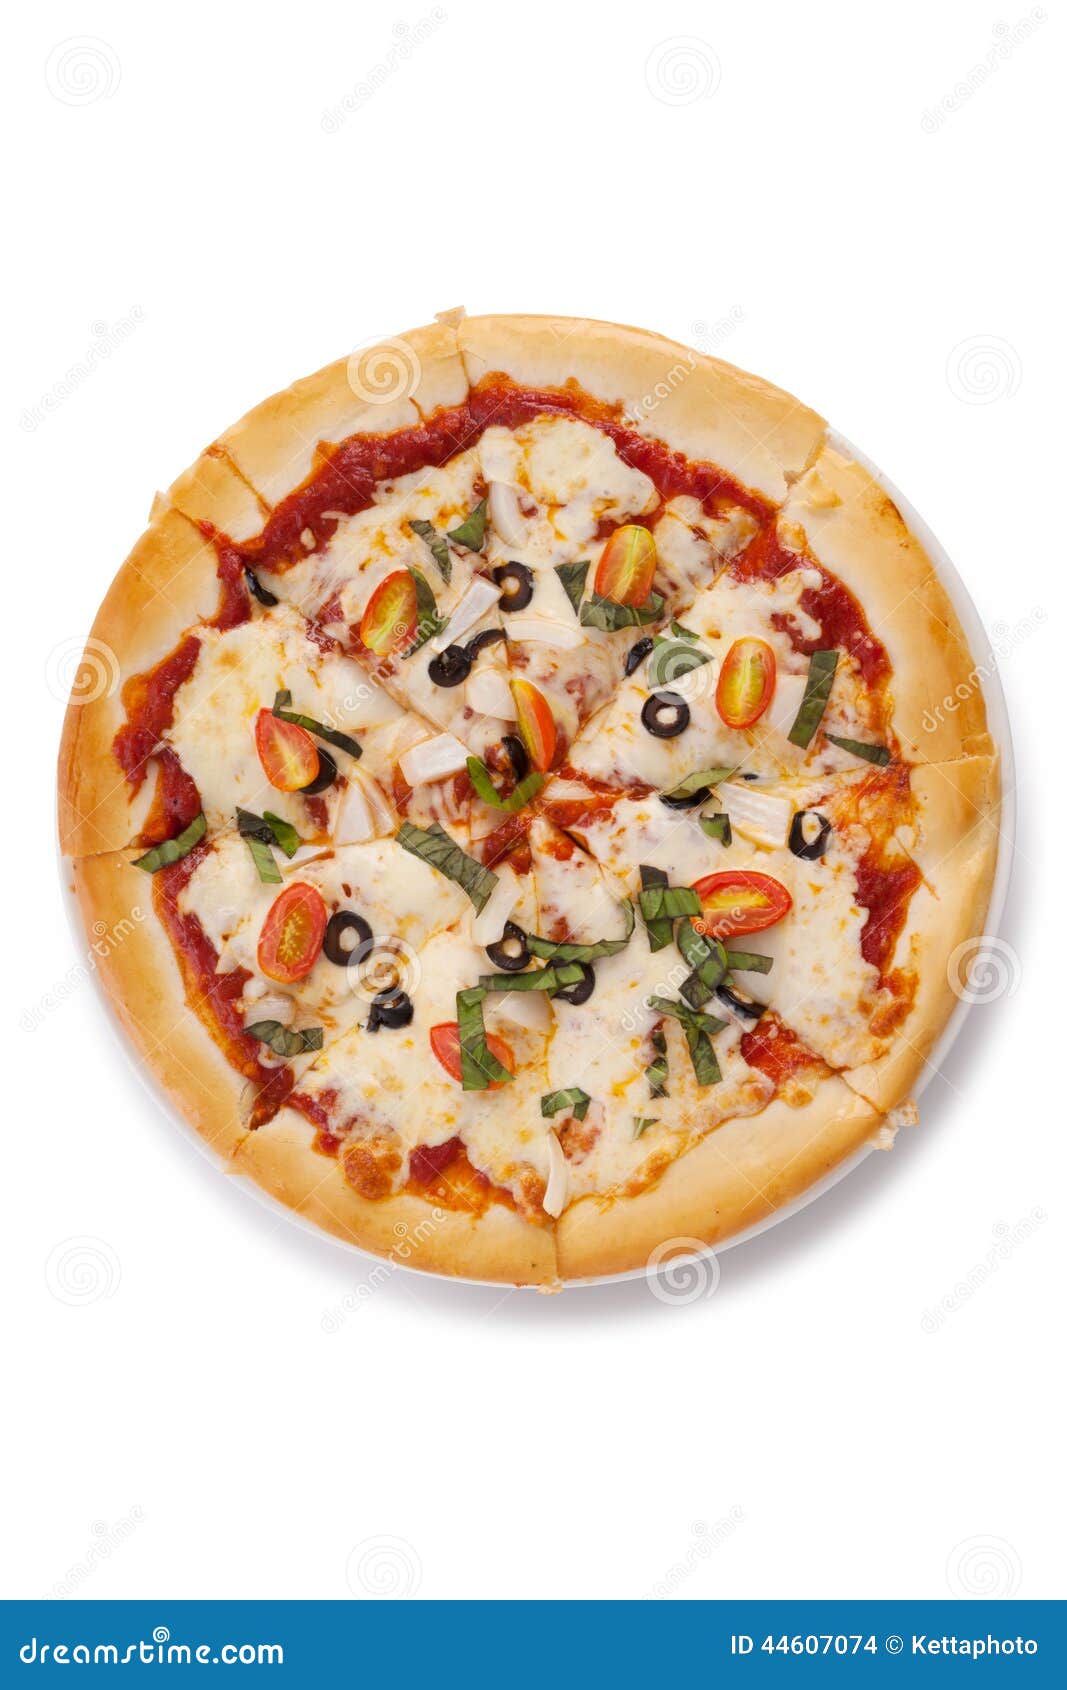 Pizza vegetal isolada no branco com trajetos de grampeamento